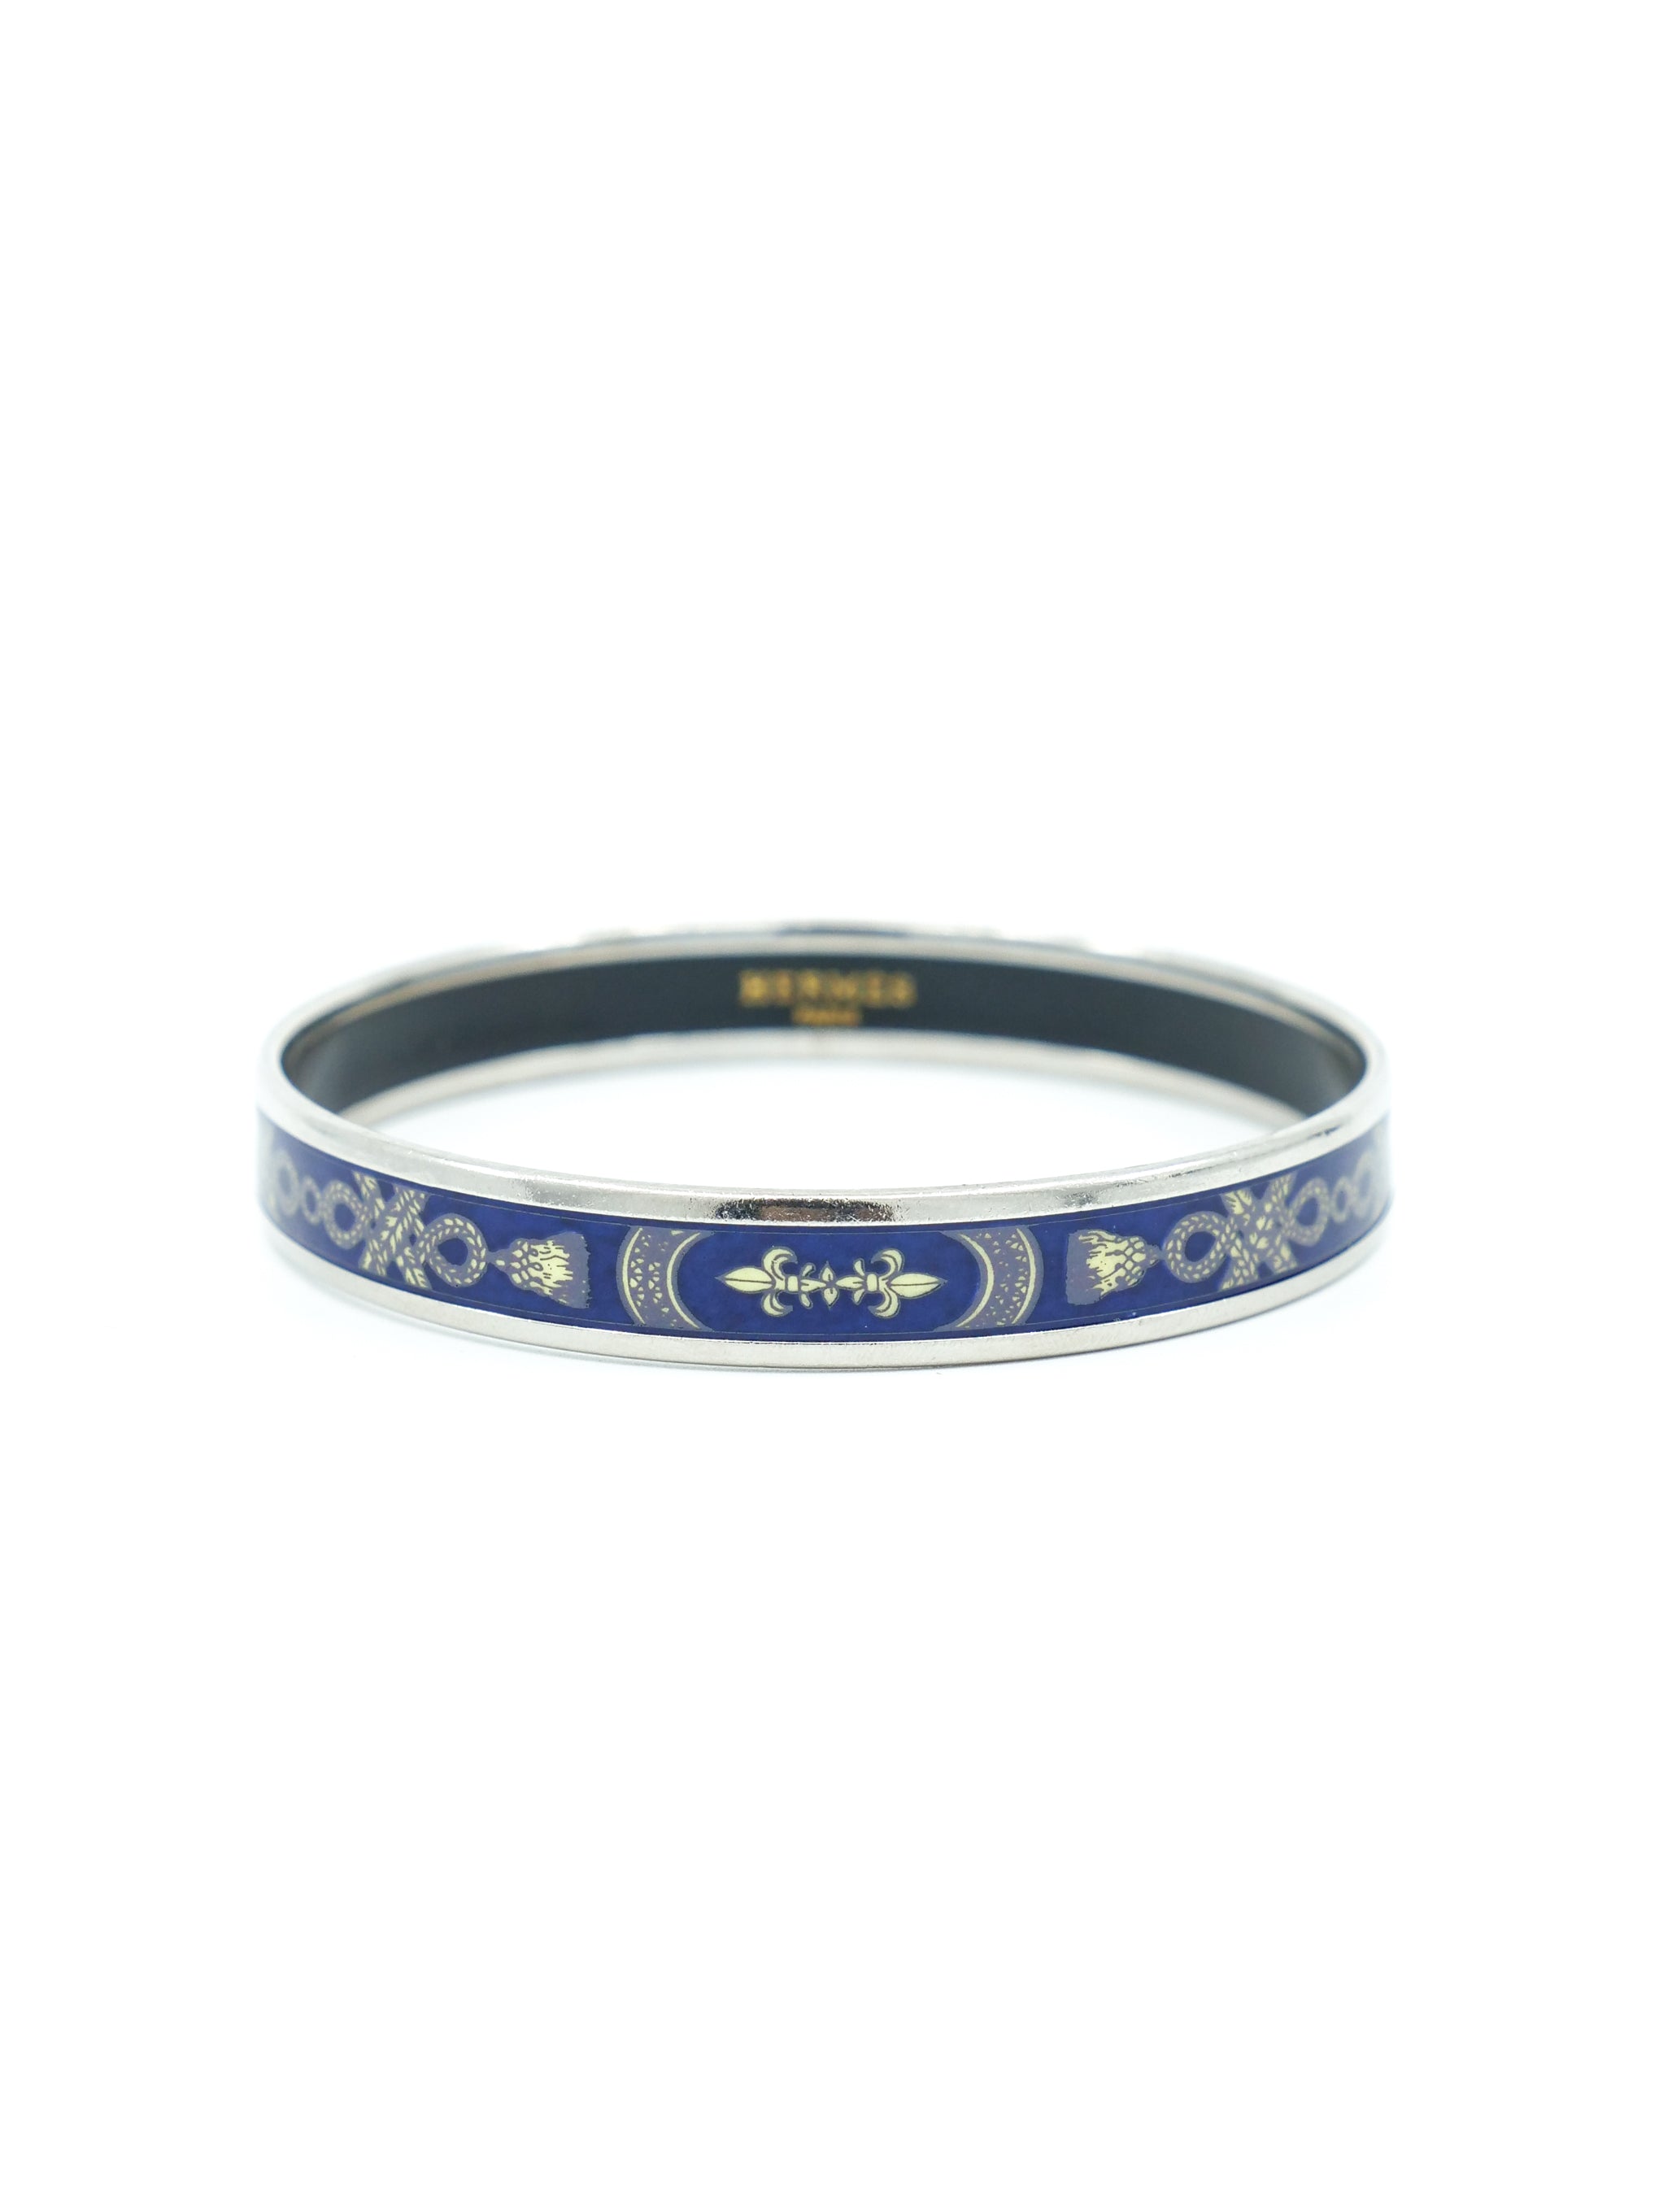 Belle Etoile Royale Collection sterling silver bangle bracelet. – Fey & CO.